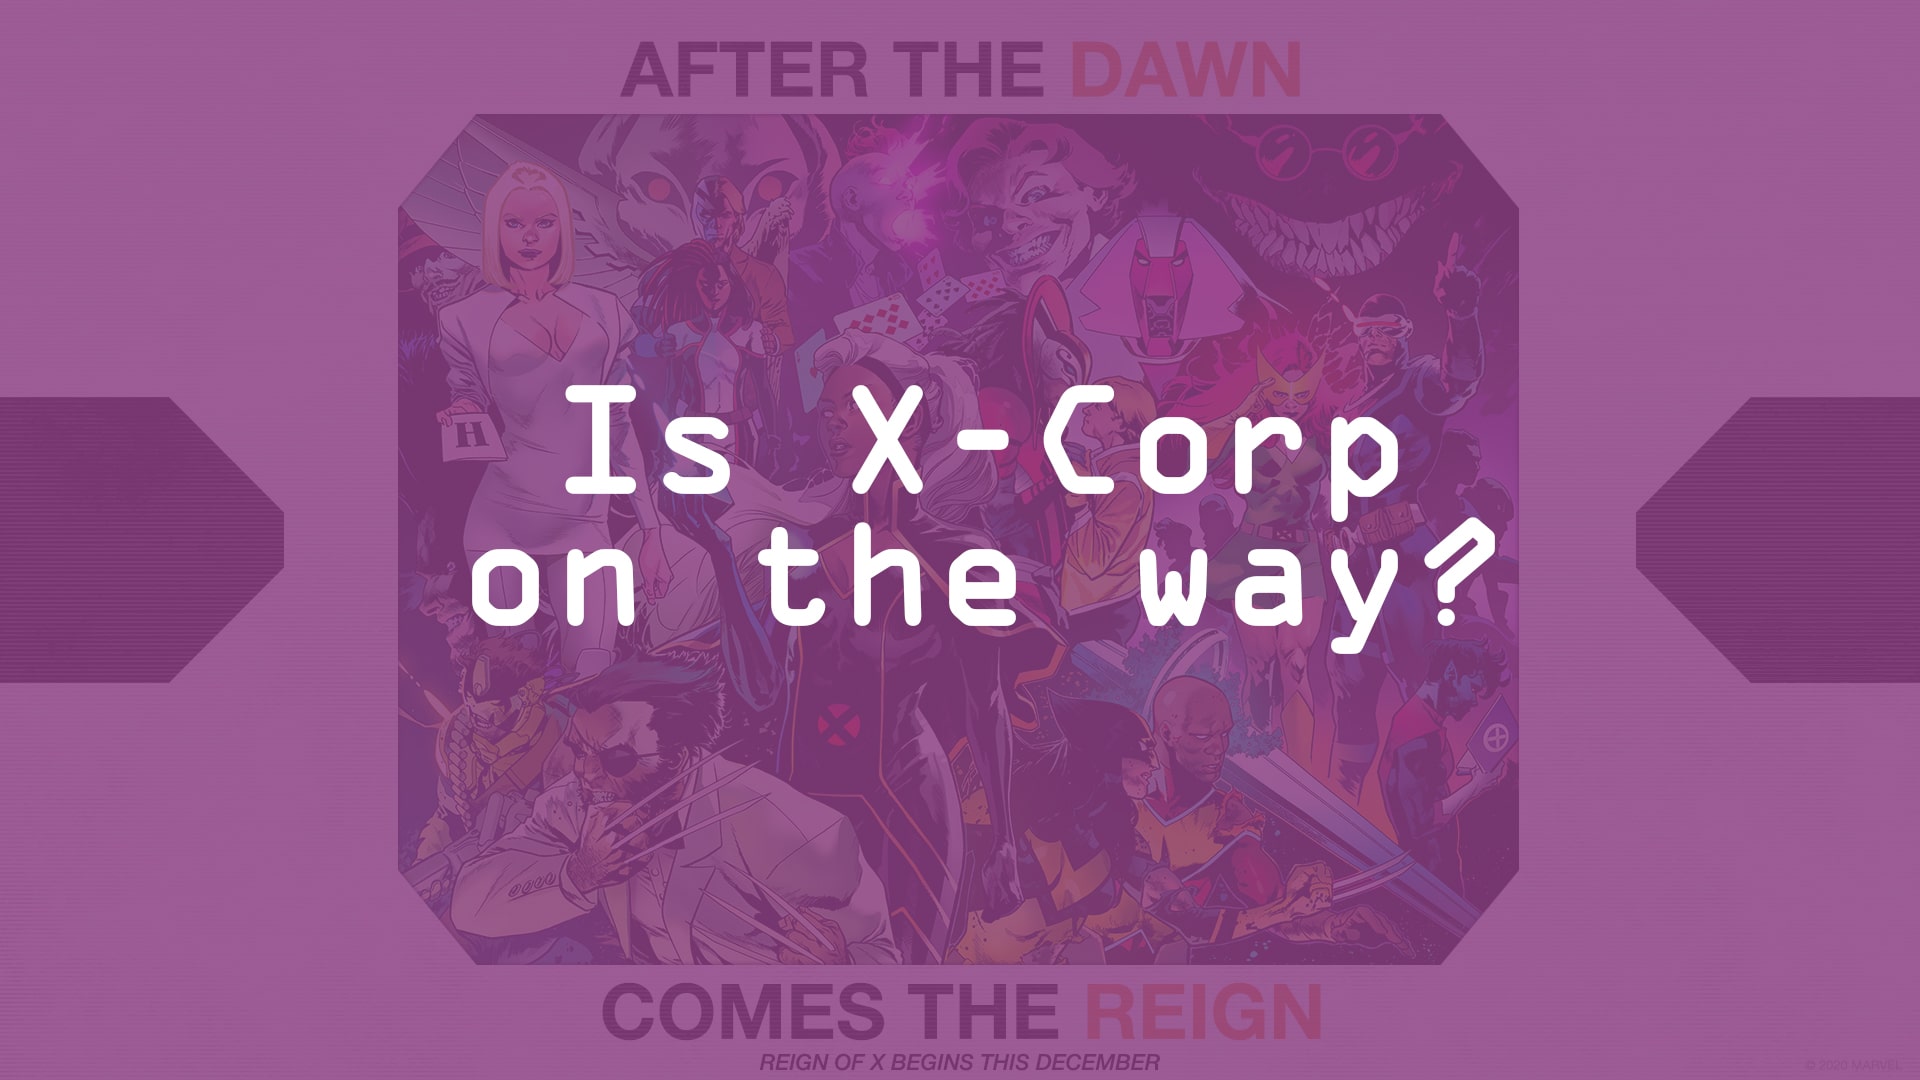 Jonathan Hickman confirms new X-Men series 'X-Corp' on the way